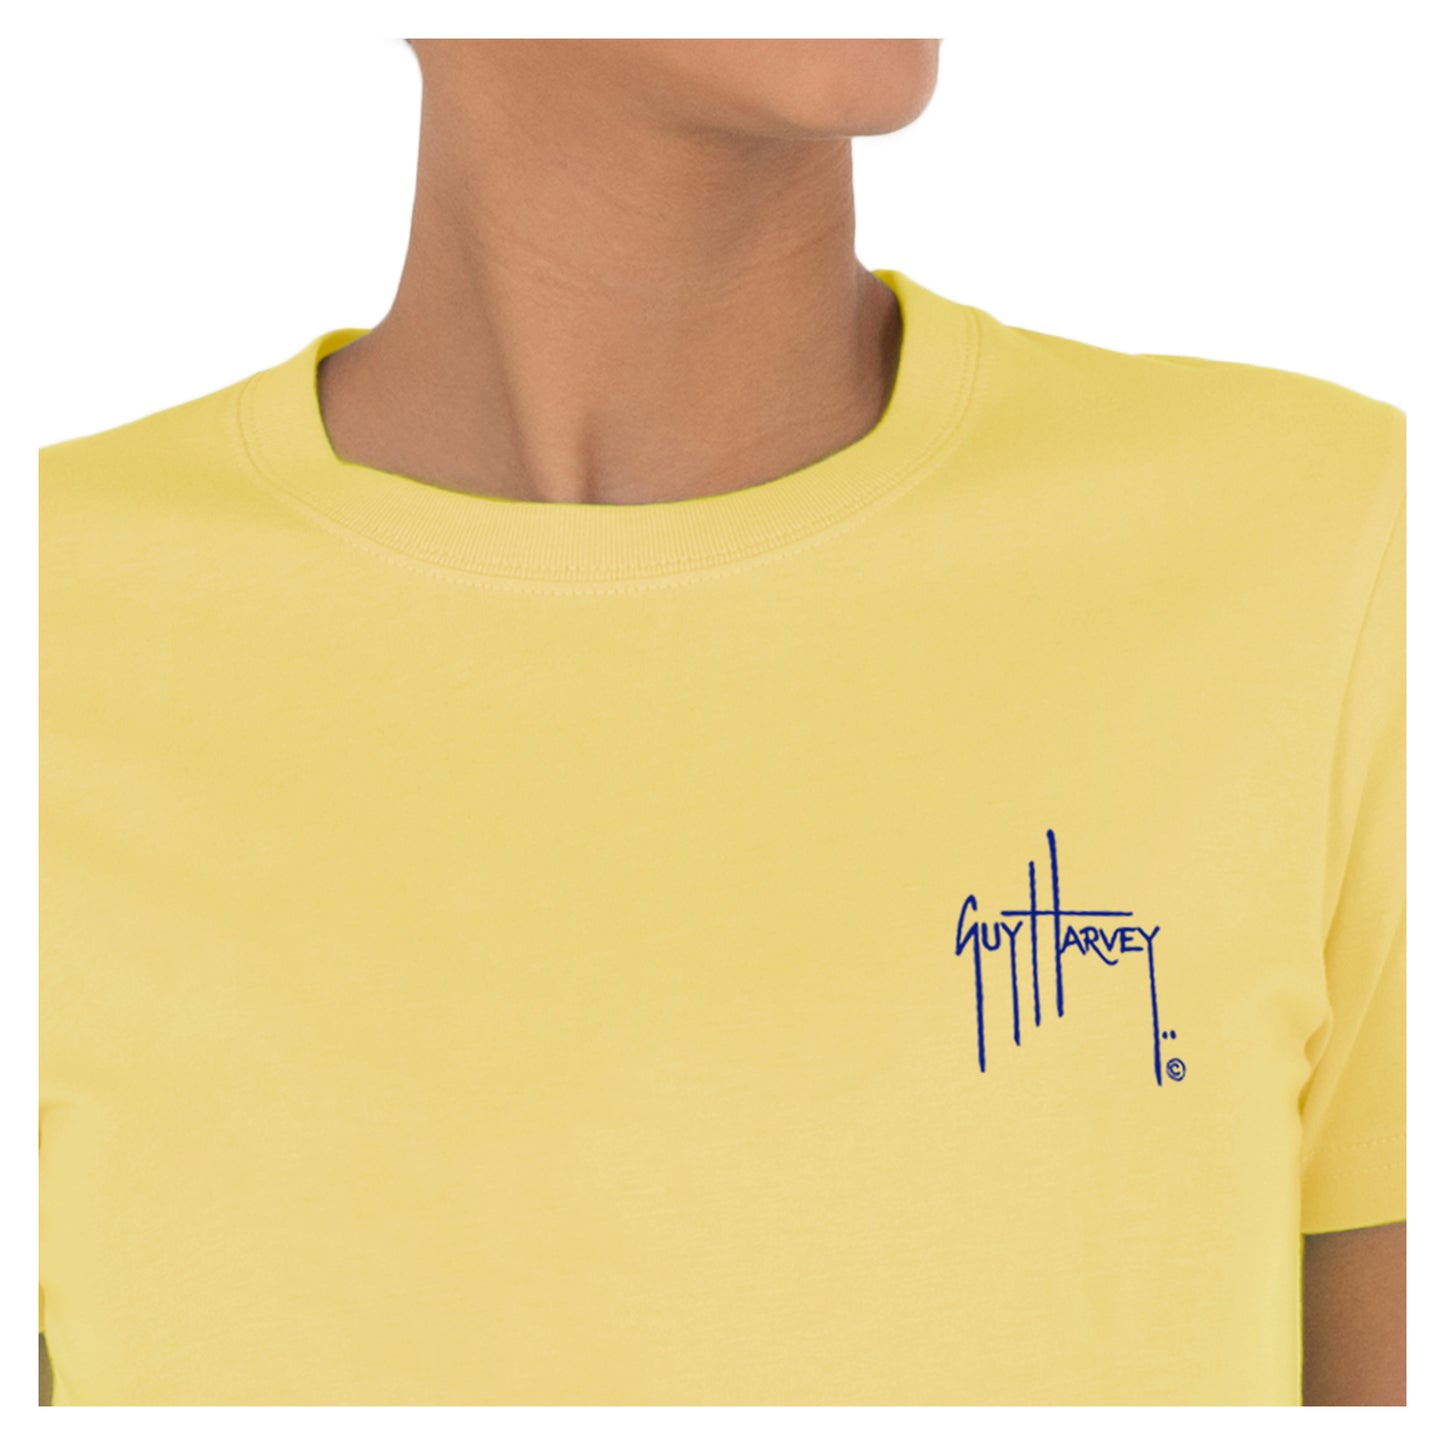 Ladies Tropic Short Sleeve Yellow T-Shirt